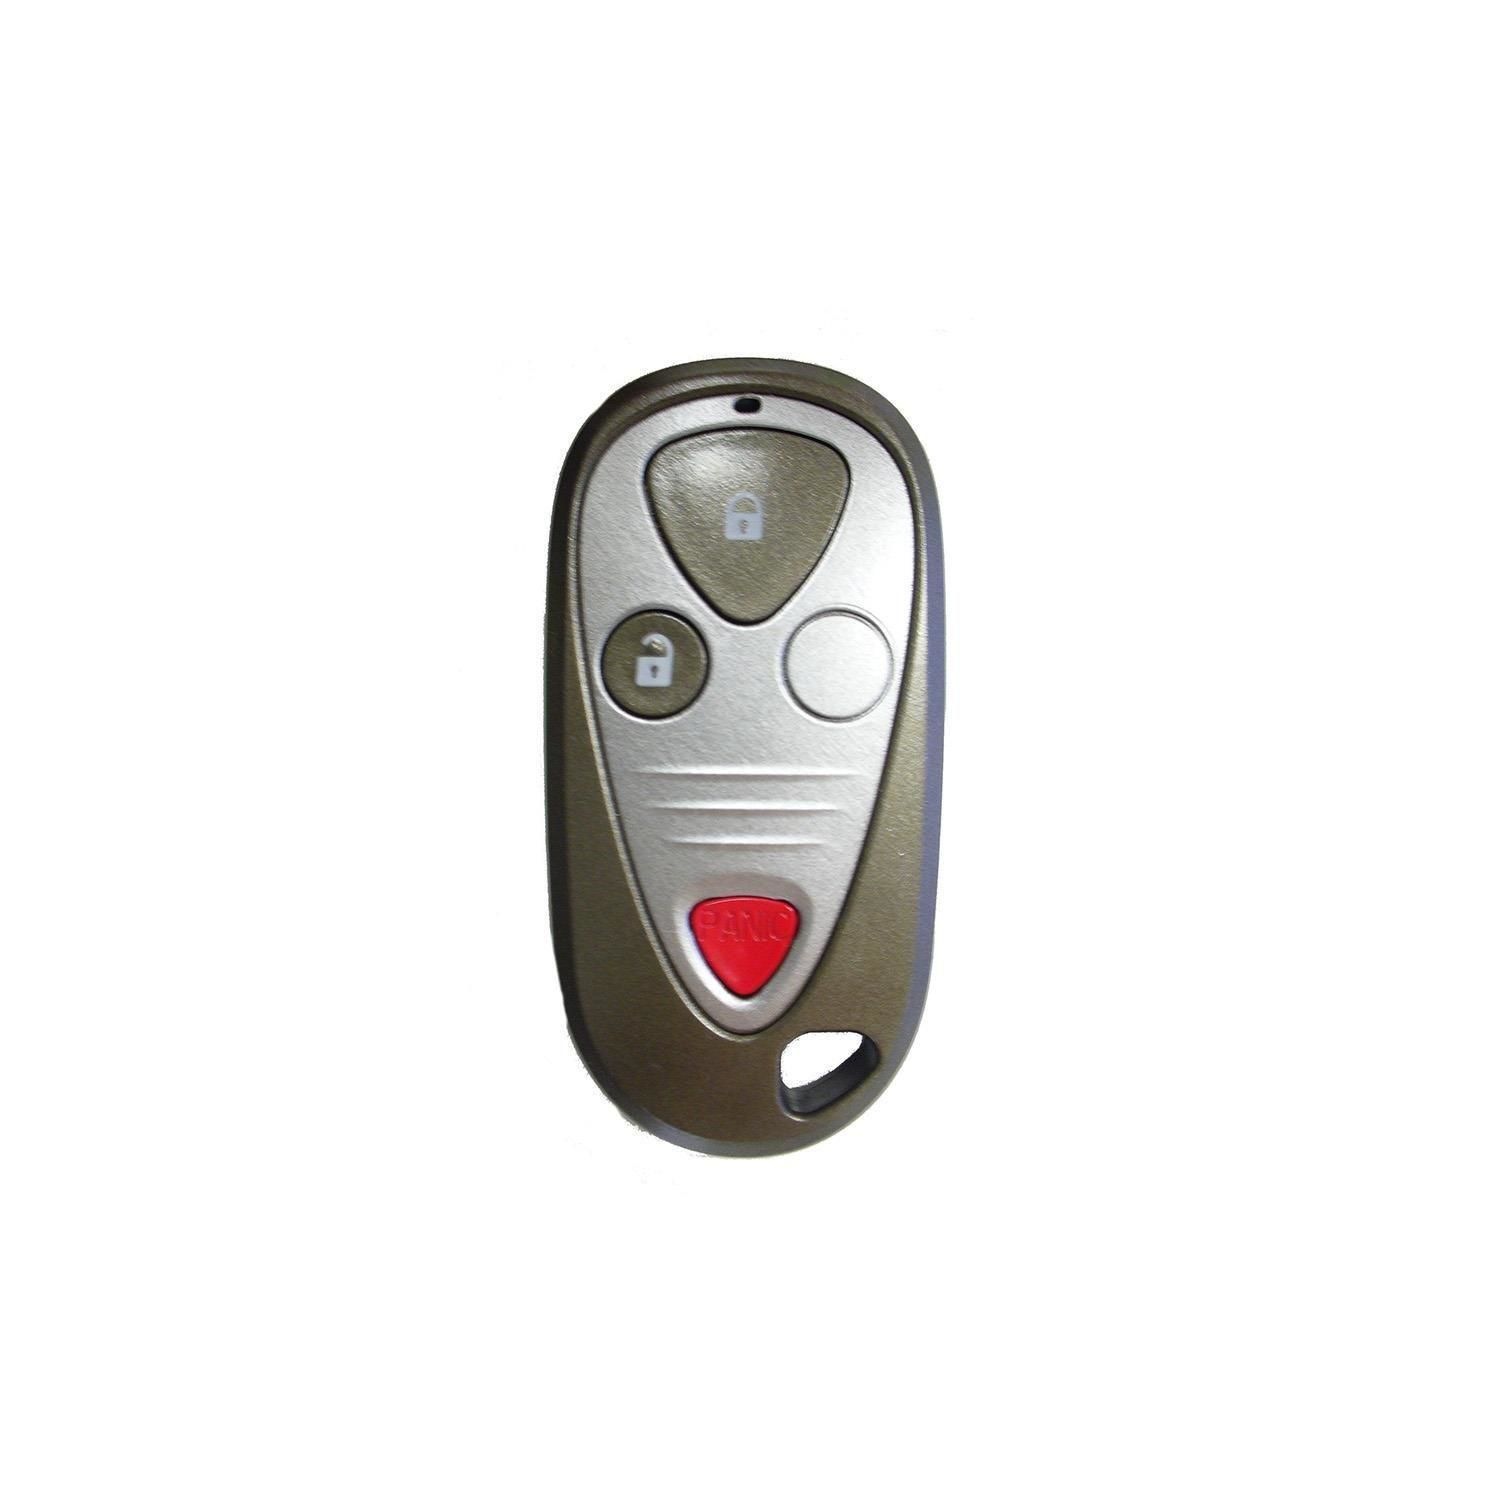 Remotes Unlimited Keyless Entry Alarm Remote Control 082-6125